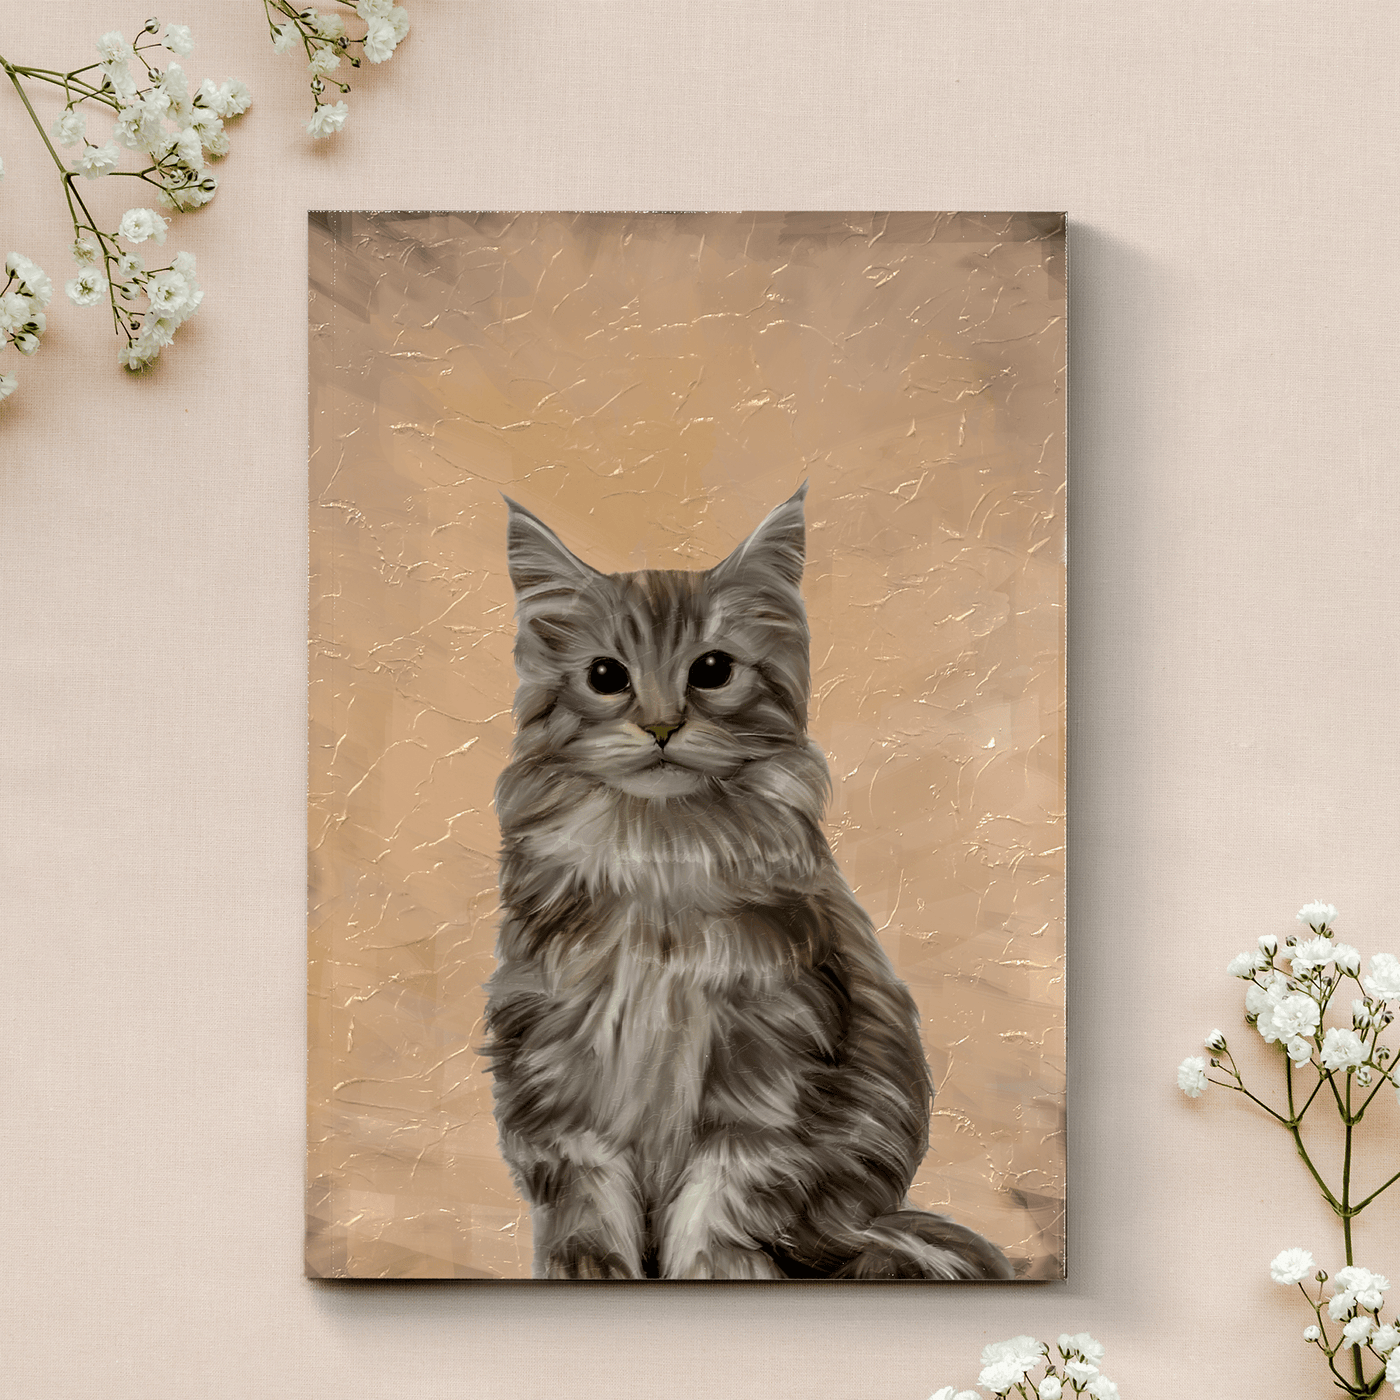 acrylic pet portraits of an adorable cat